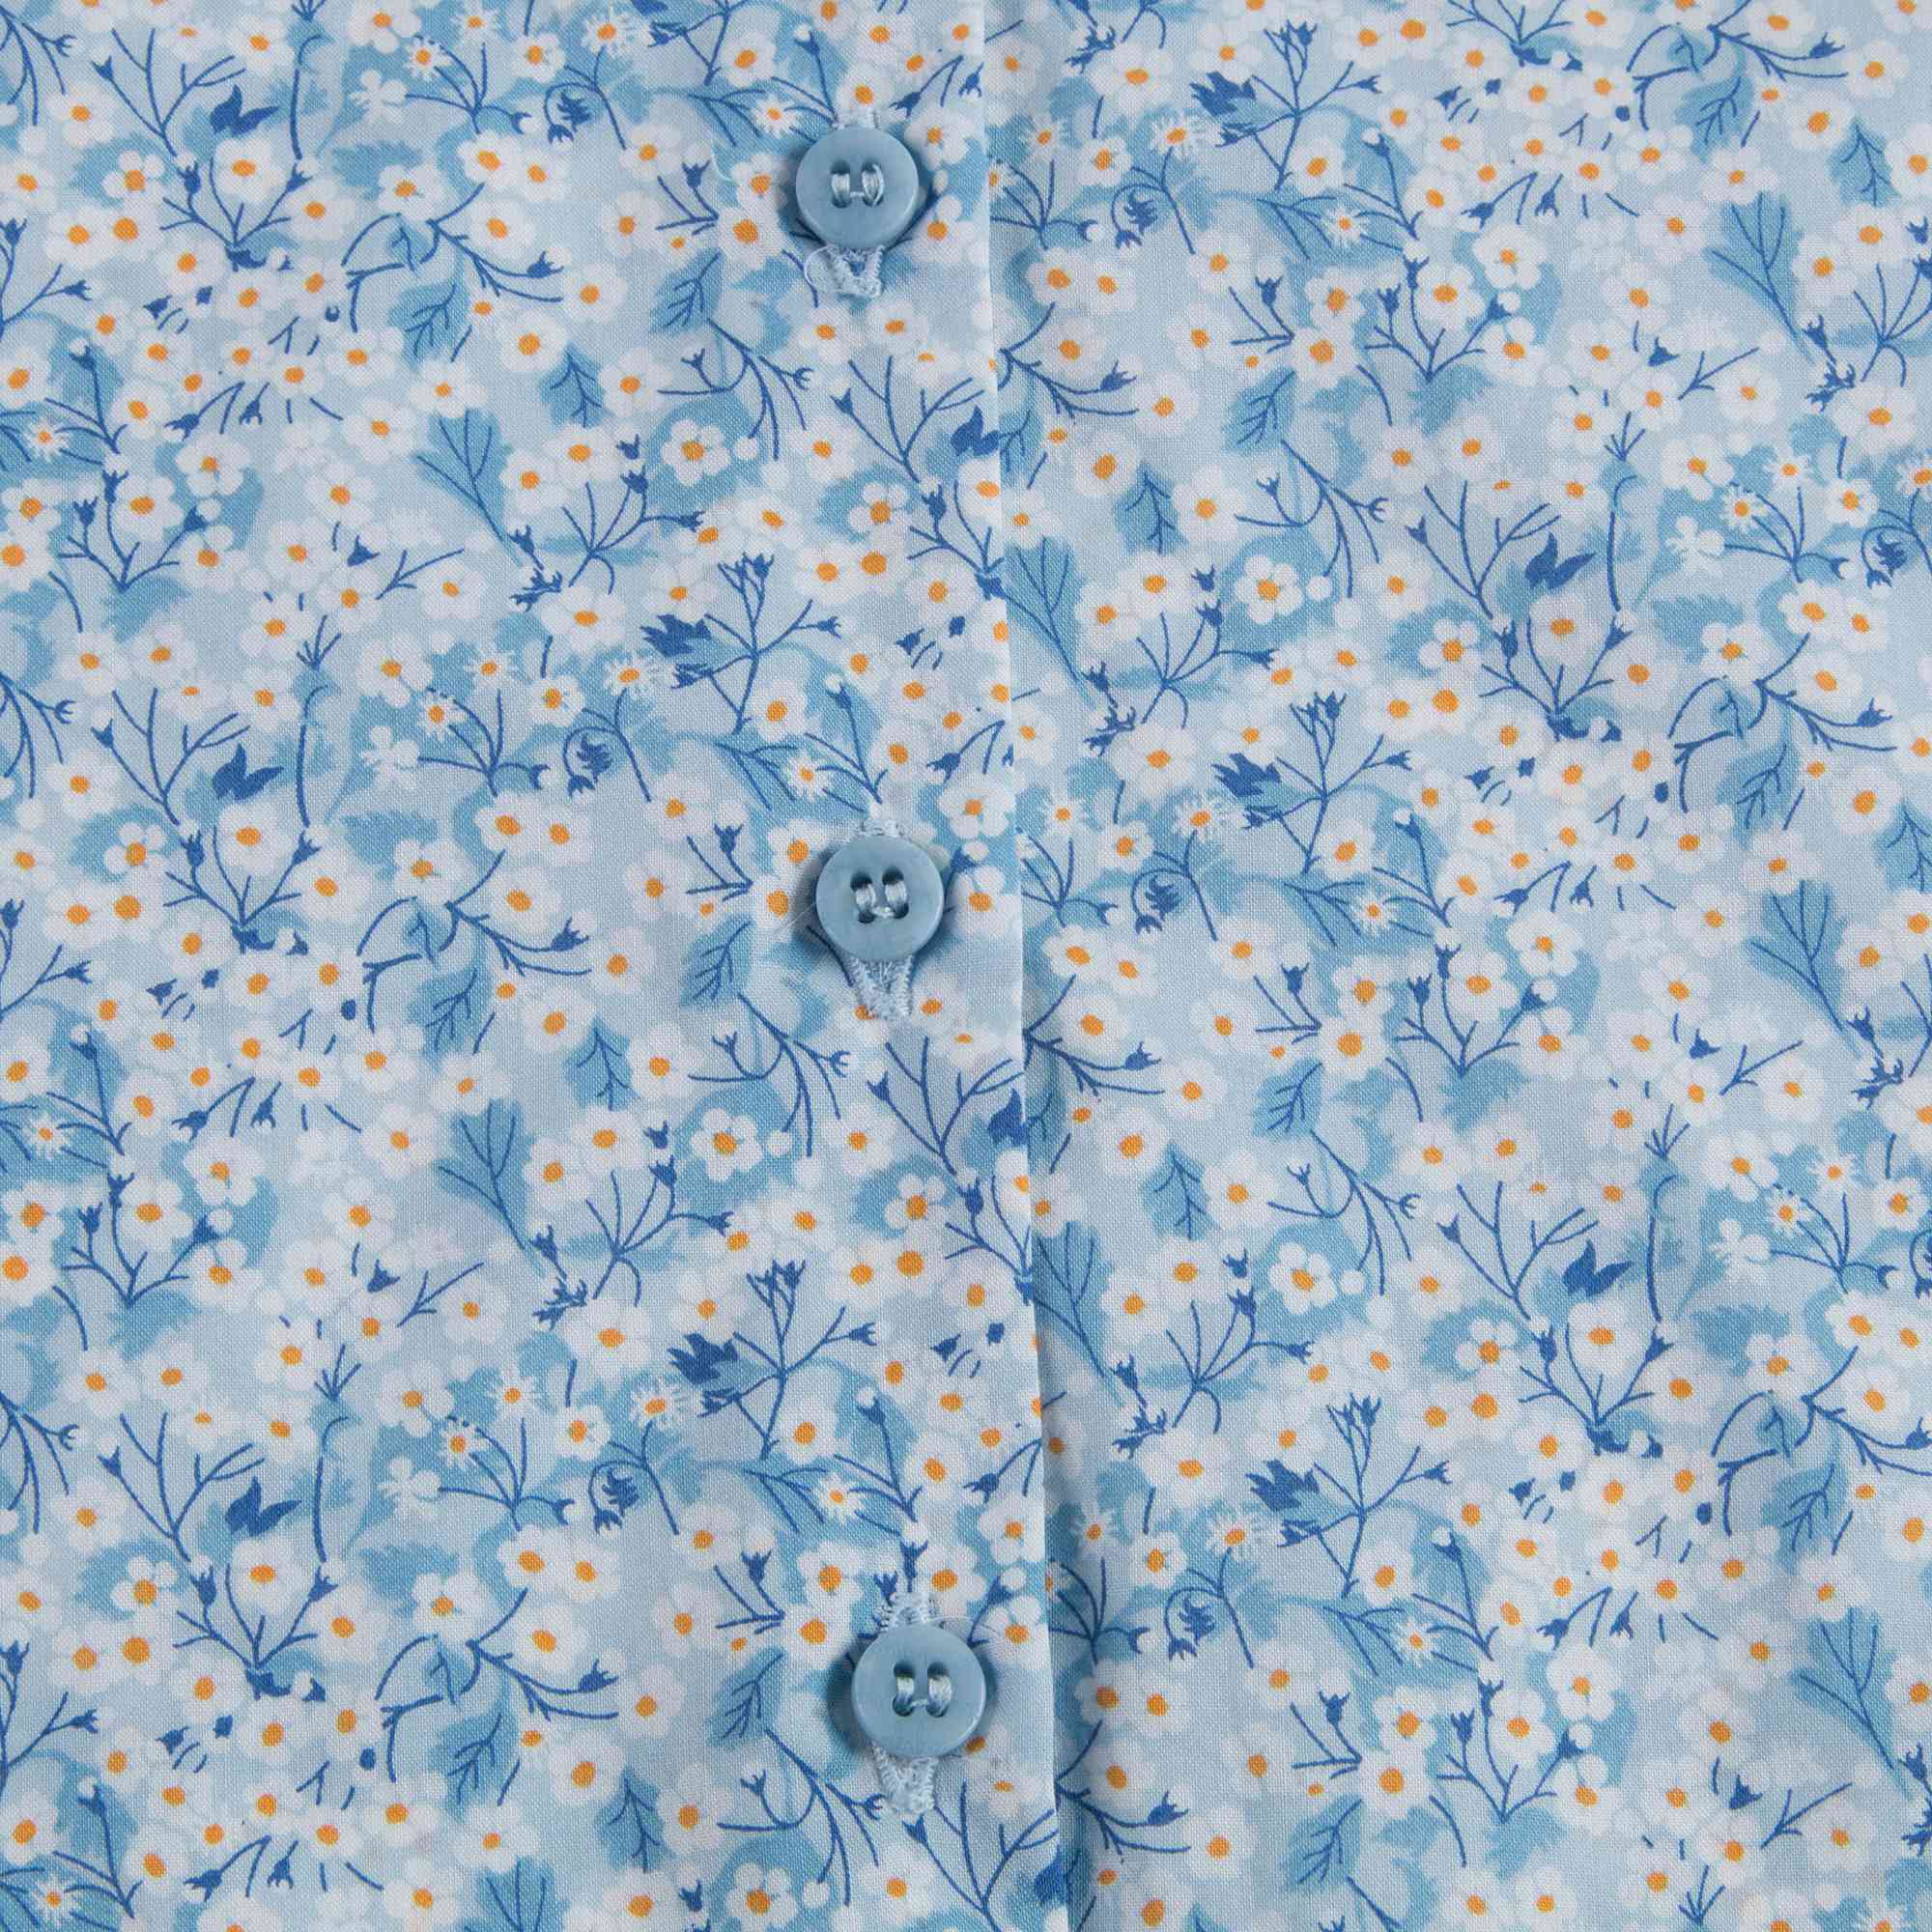 Girls Blue Small Floral Cotton Shirt